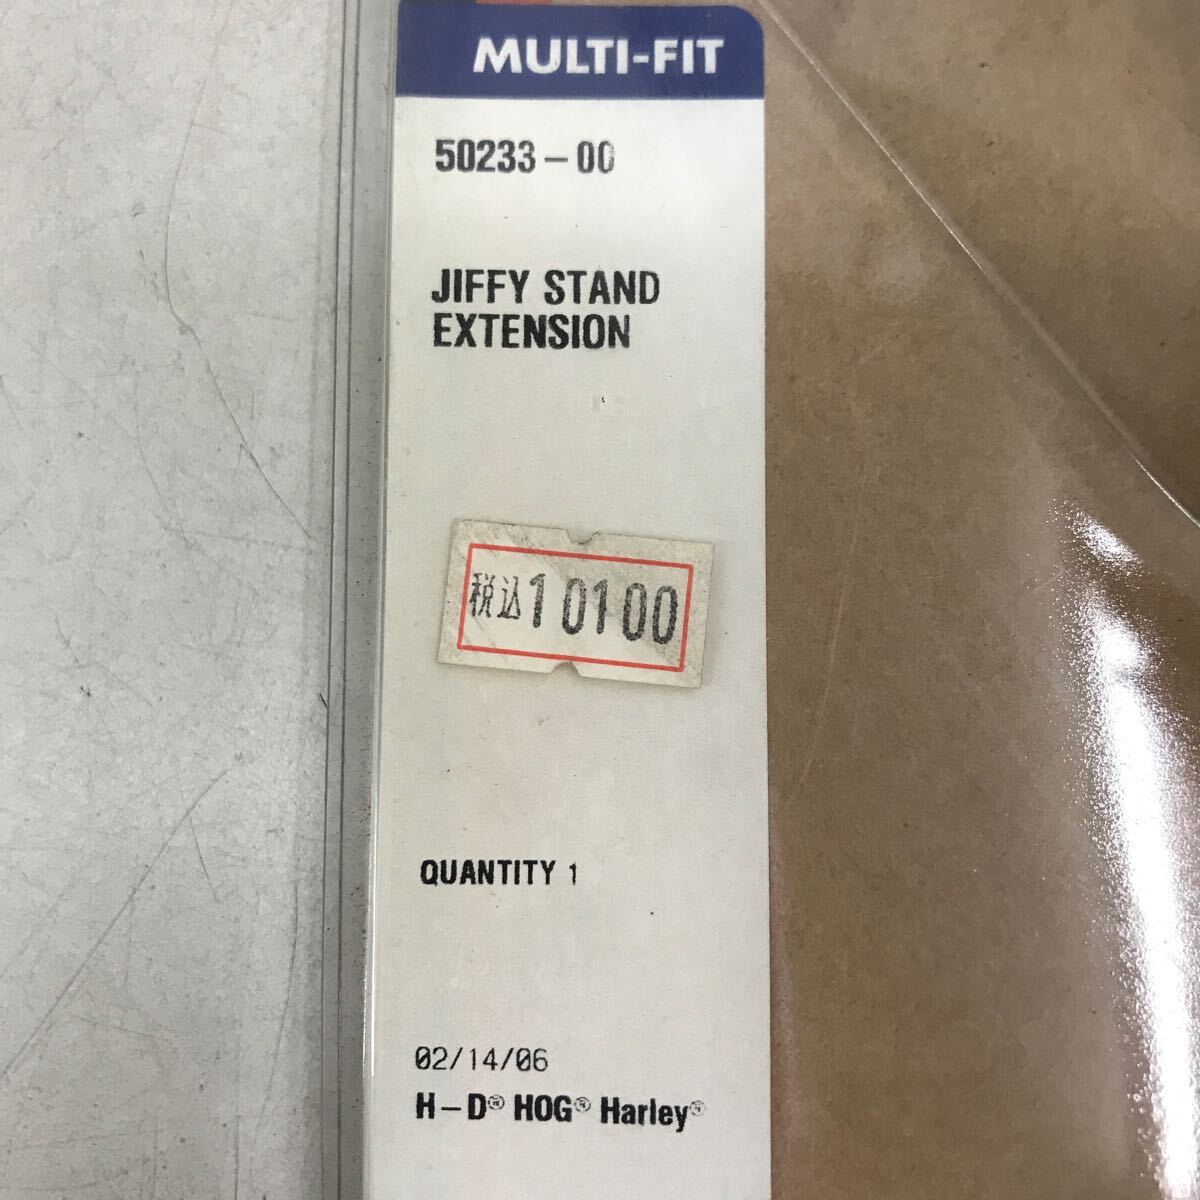 2-15798* Harley original jifi- stand extension 50233-00 60 size 